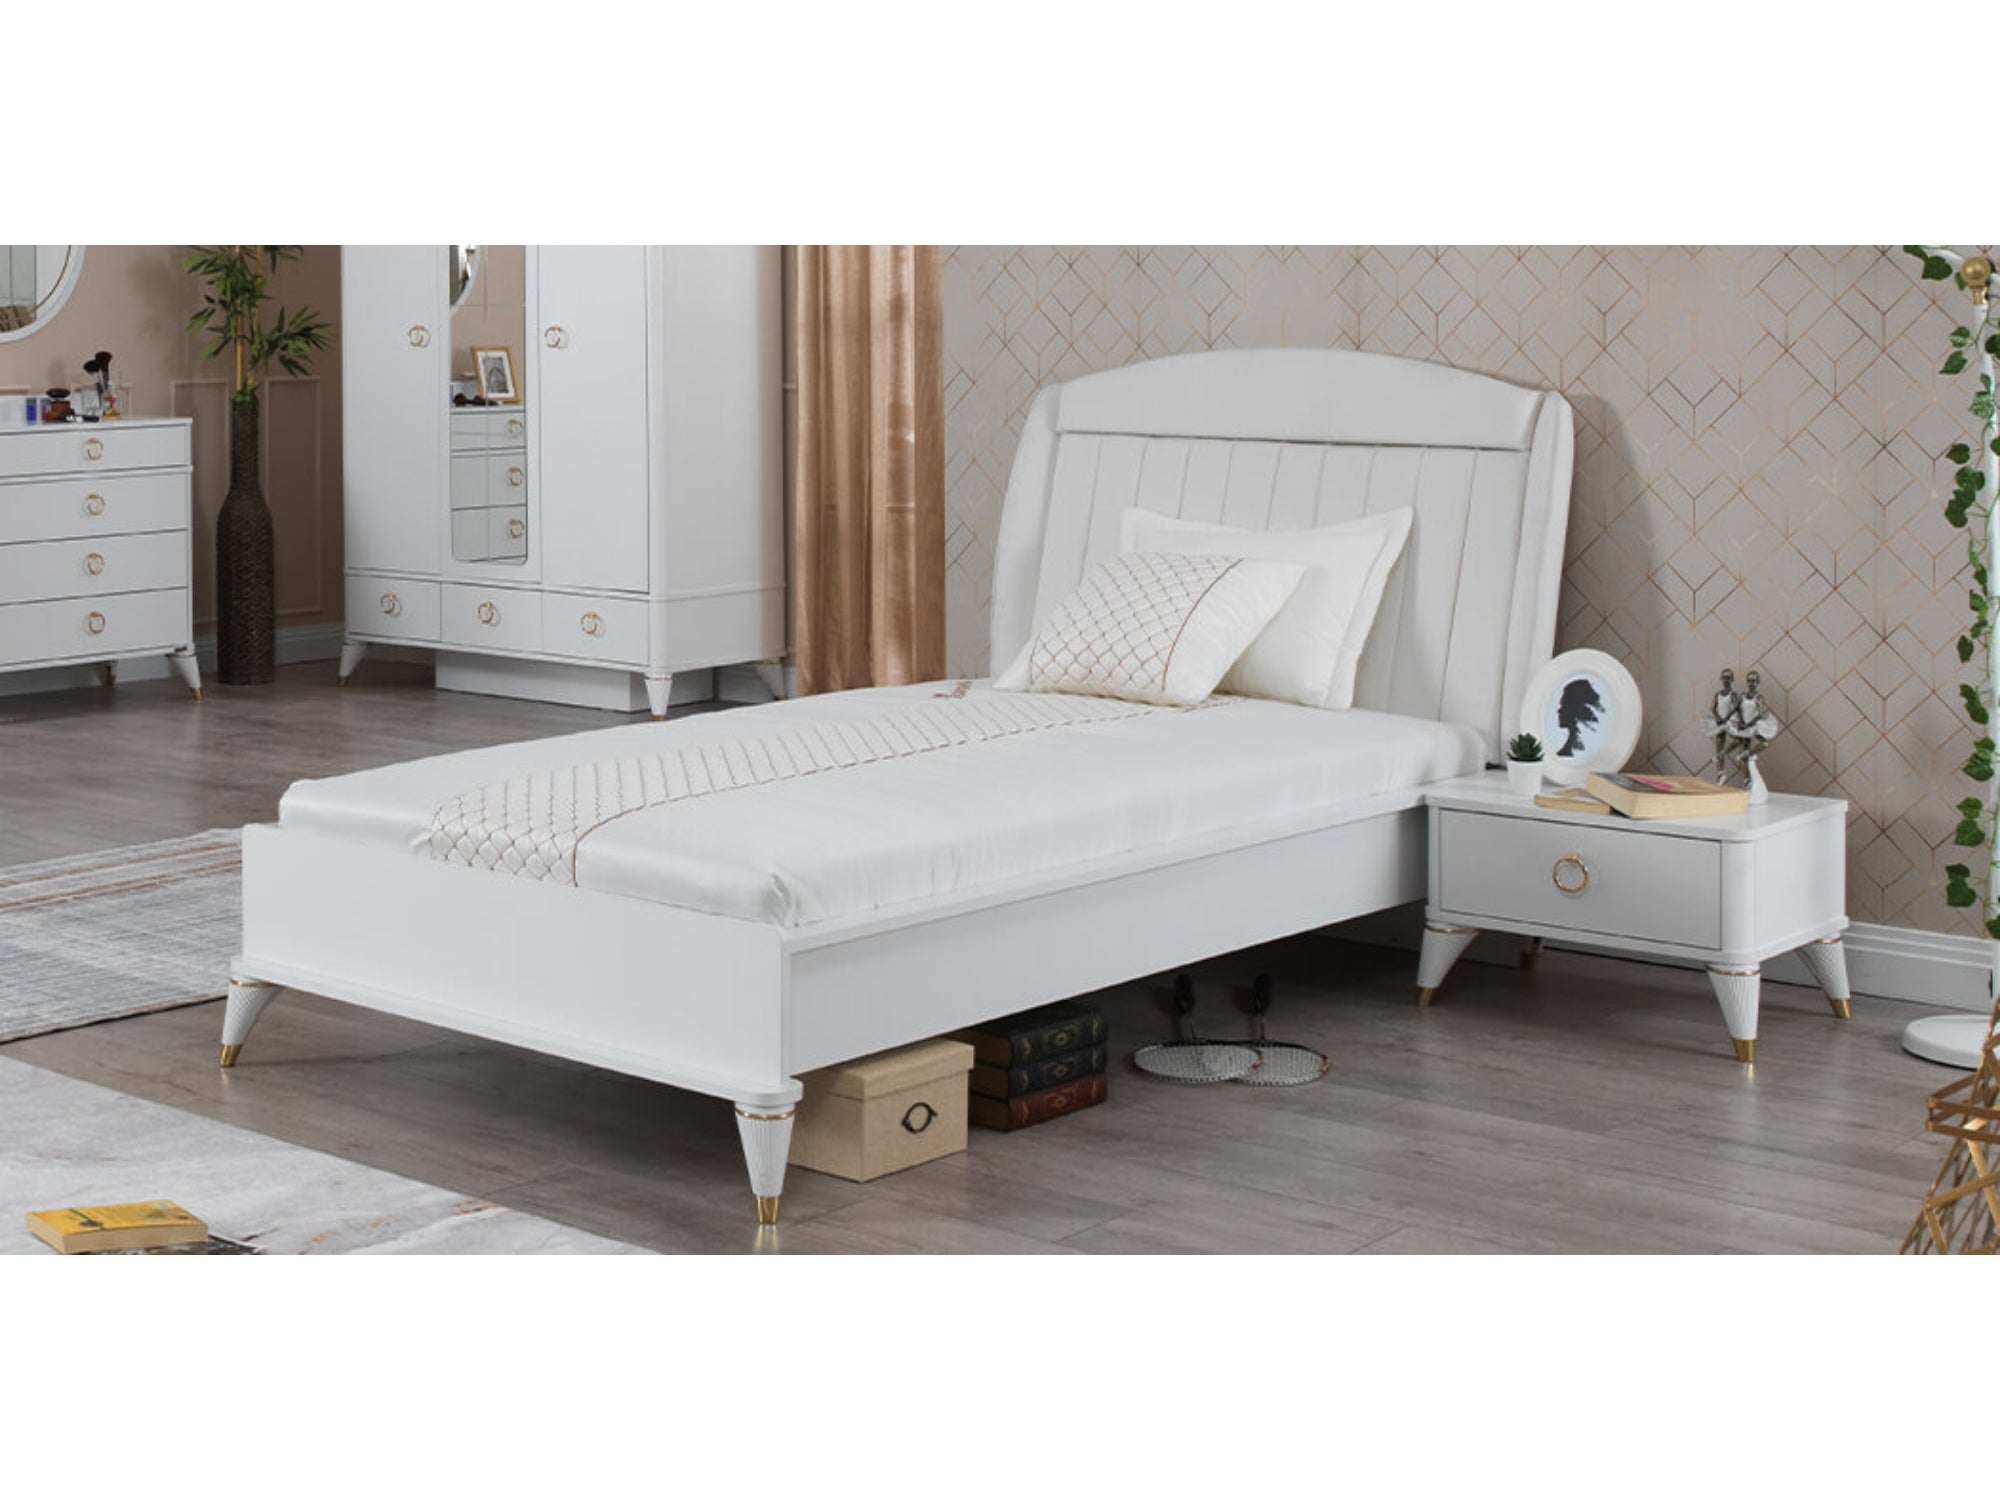 Masal Twin Bed With Headboard (European) (100X200CM)